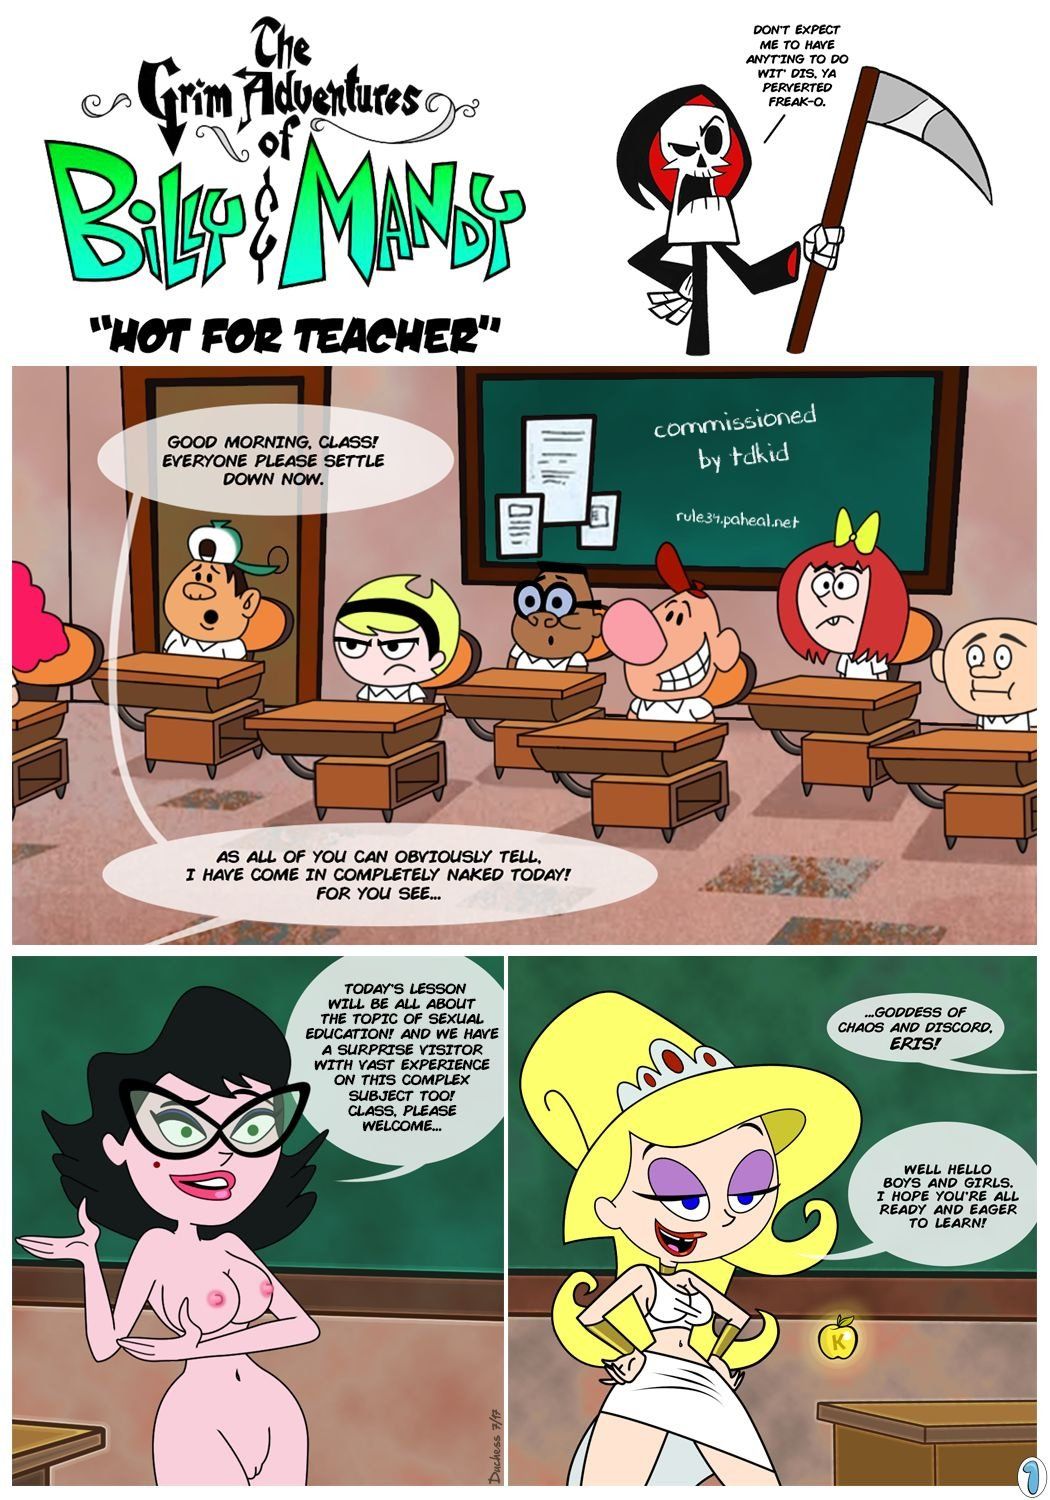 Be-Jewel reccomend teacher cartoon